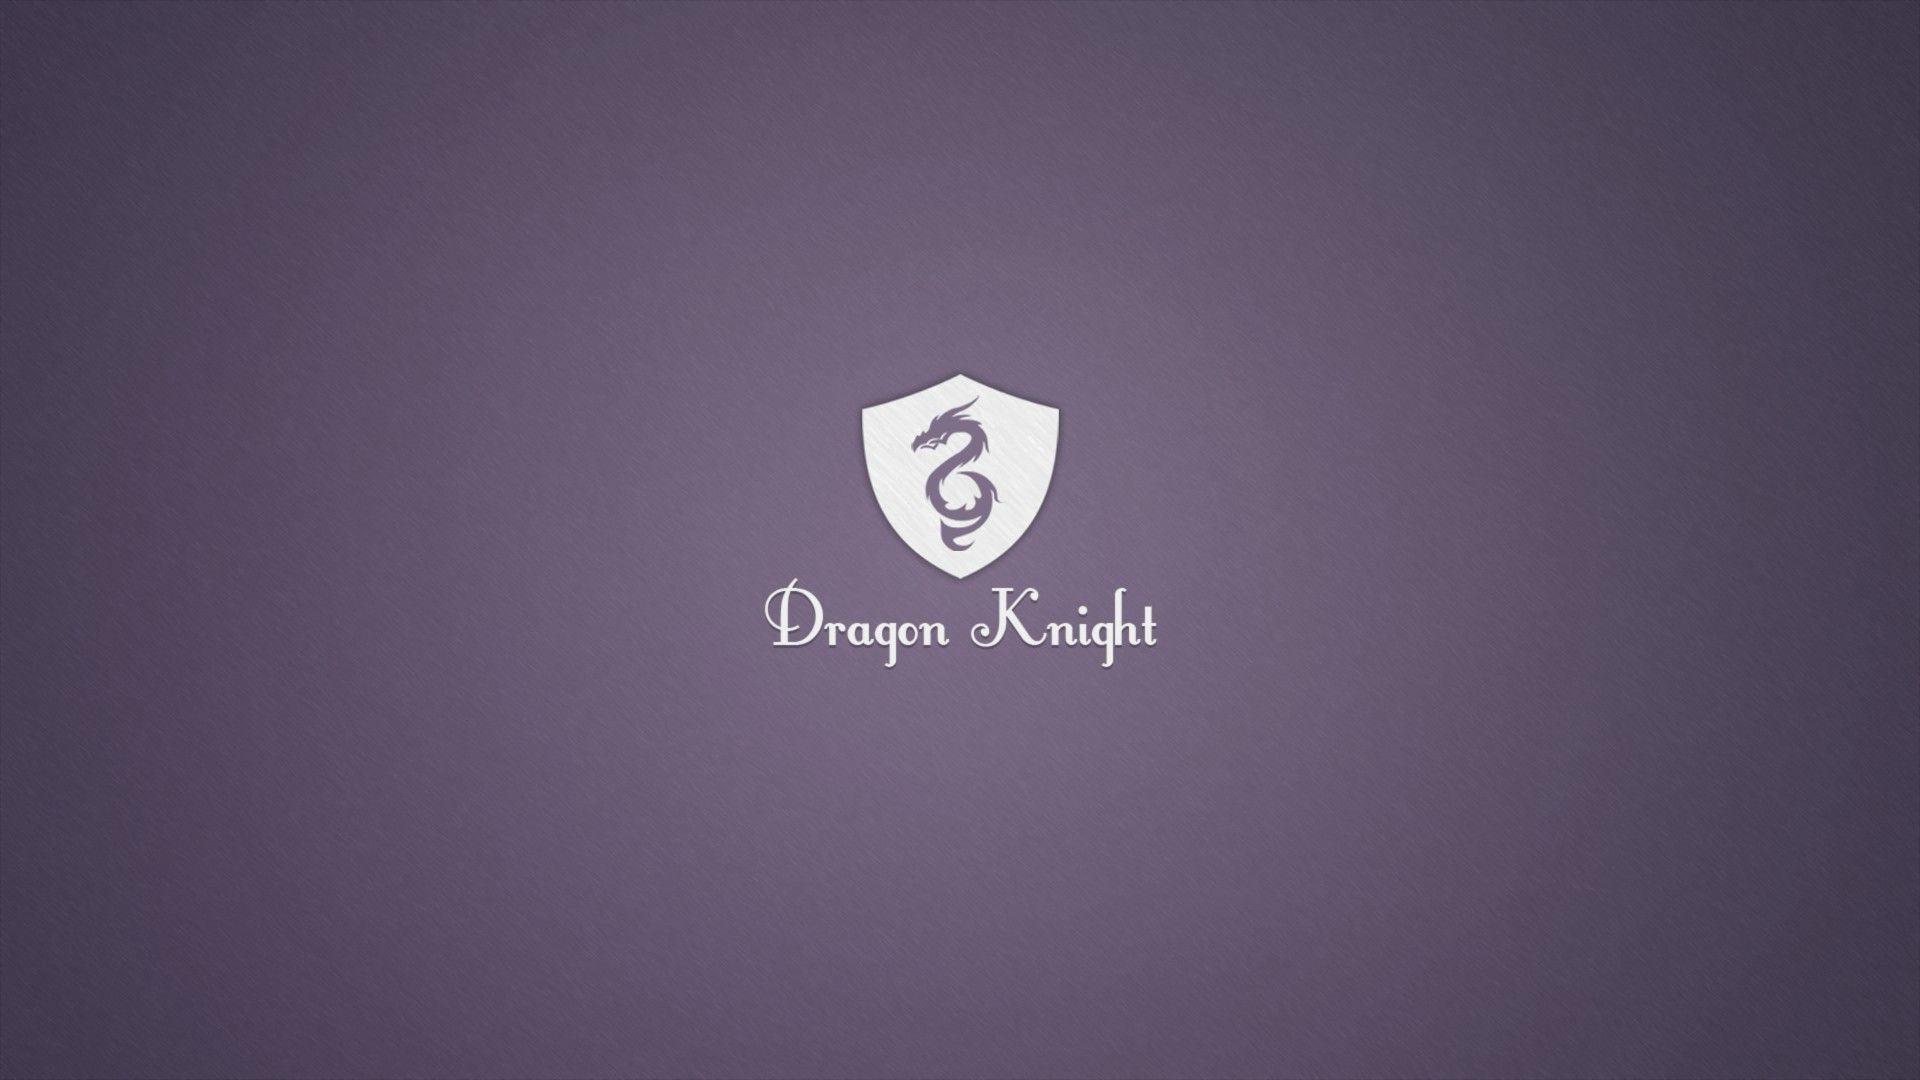 Dota 2 dragon knight wallpaper. PC